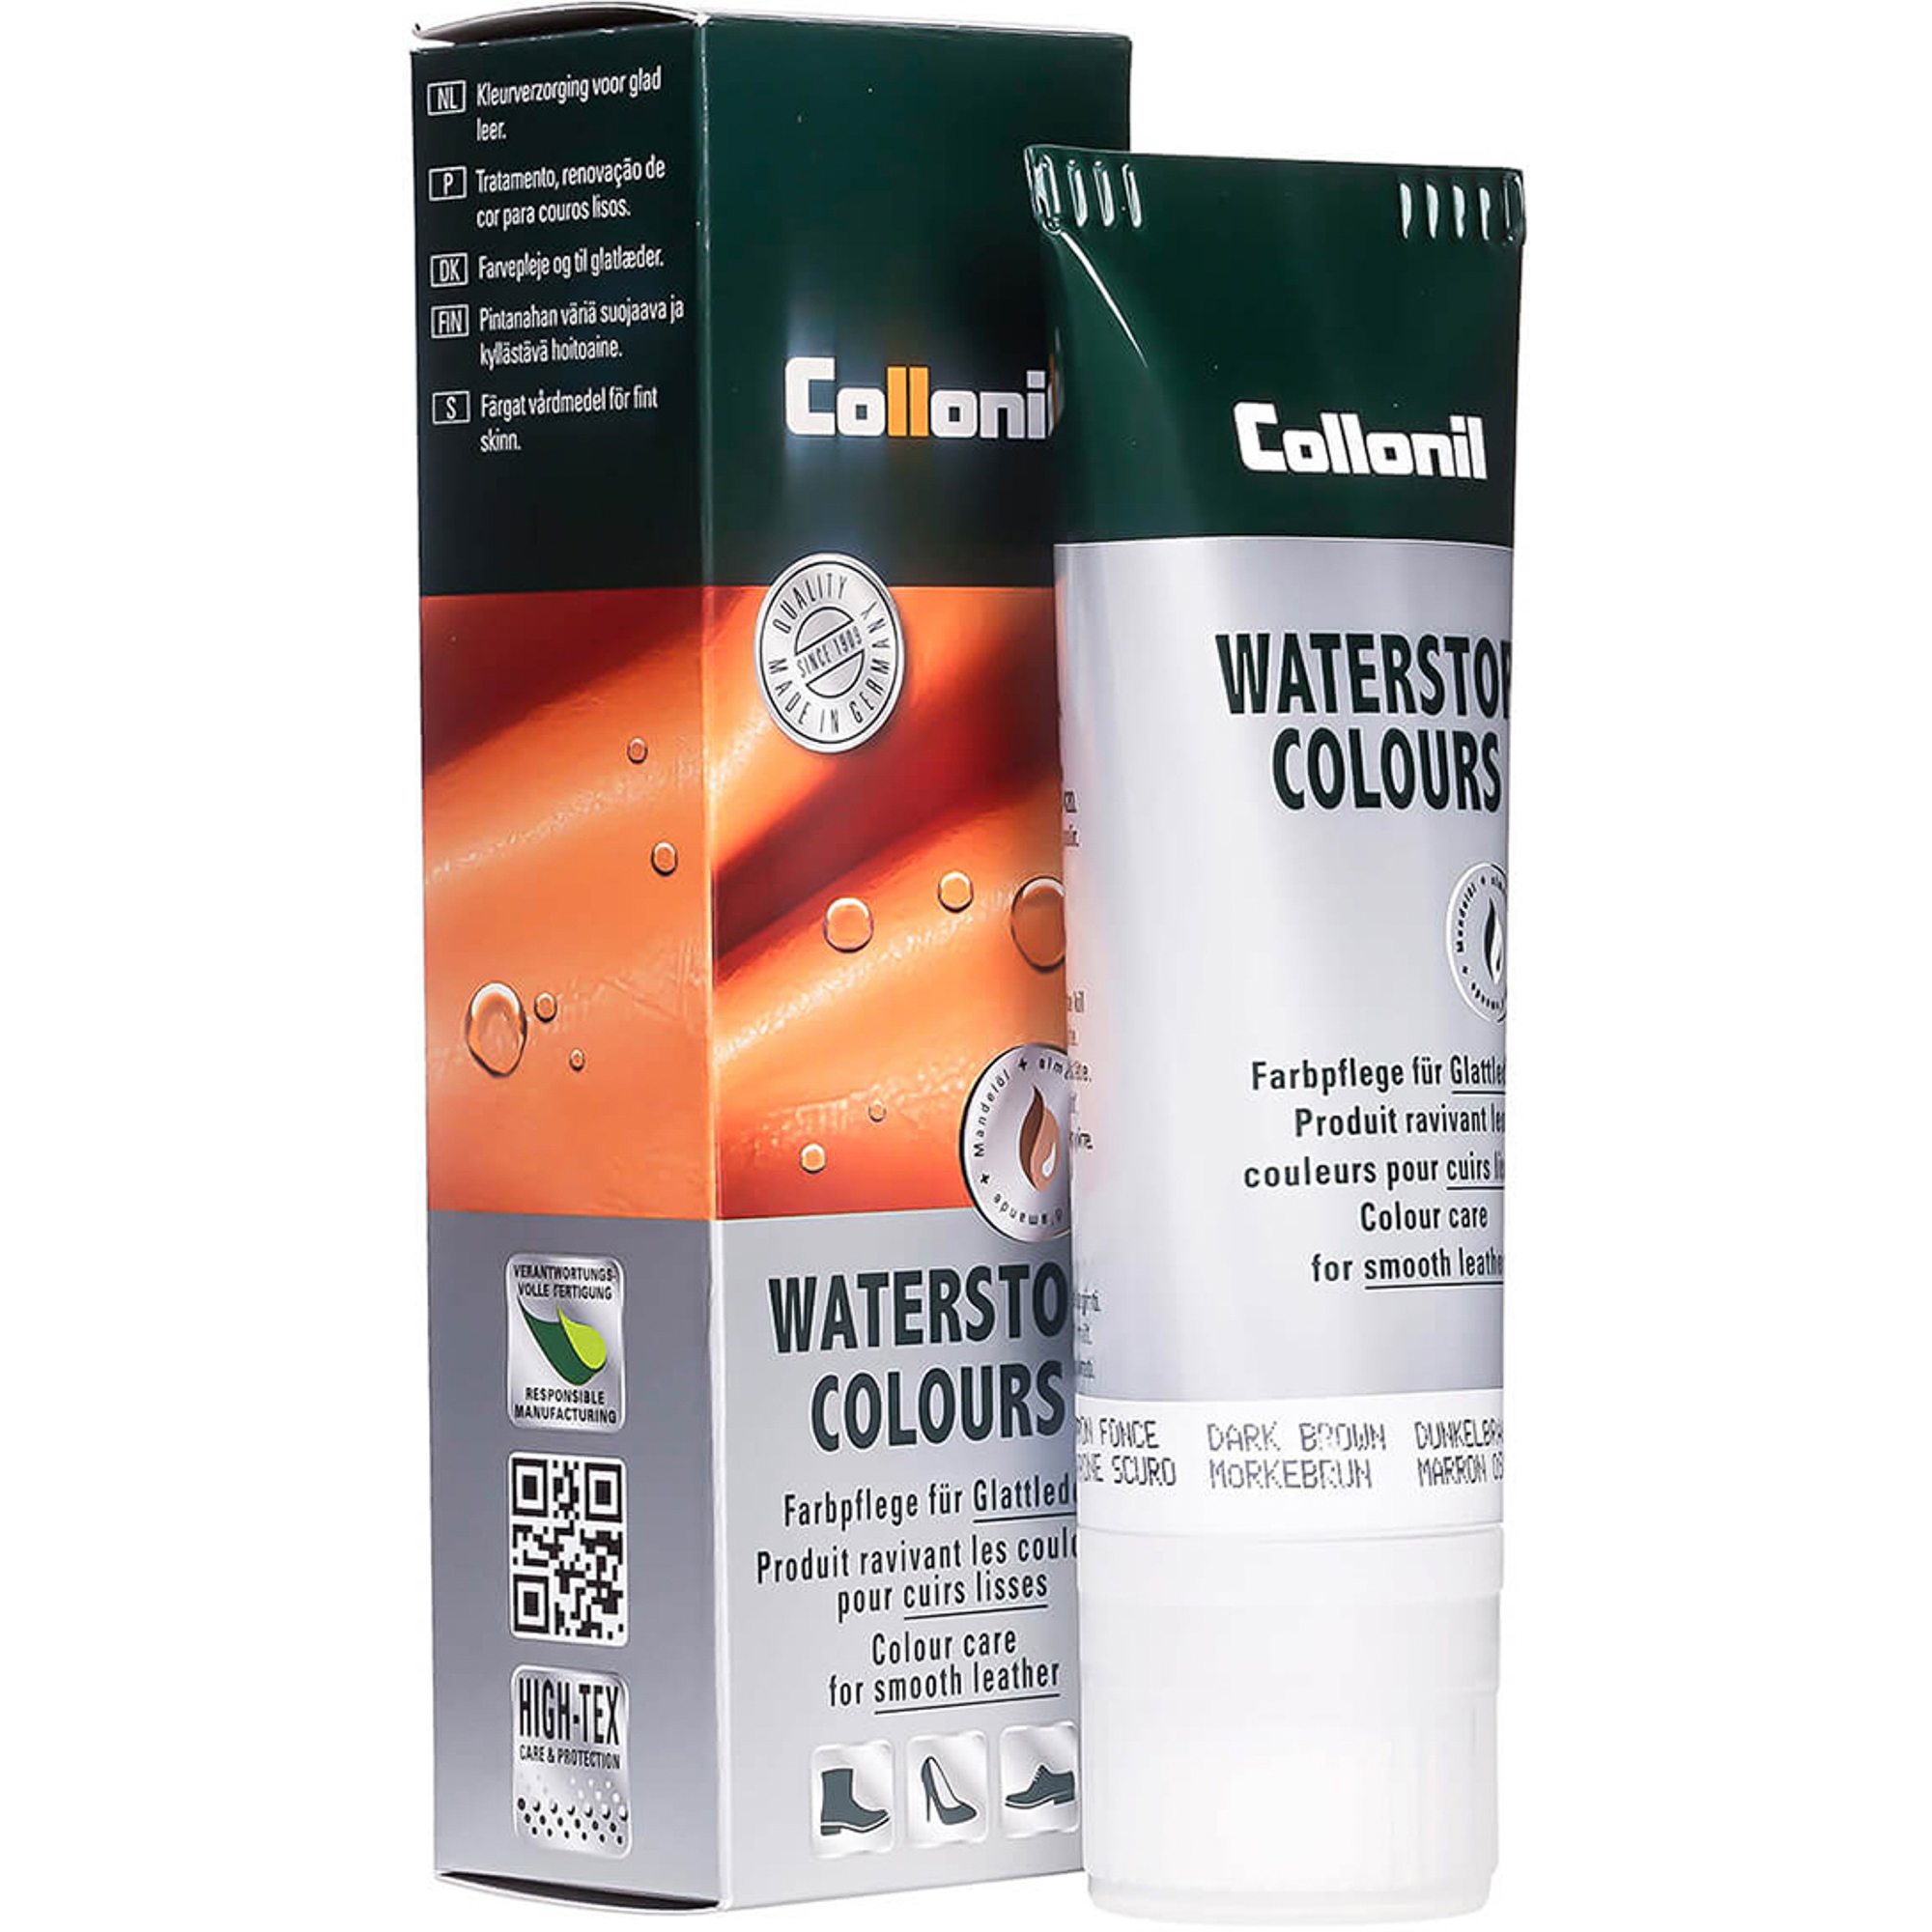 Крем Collonil Waterstop Colours водоотталкивающий темно-коричневый 75 мл крем collonil waterstop colours водоотталкивающий бесцветный 75 мл